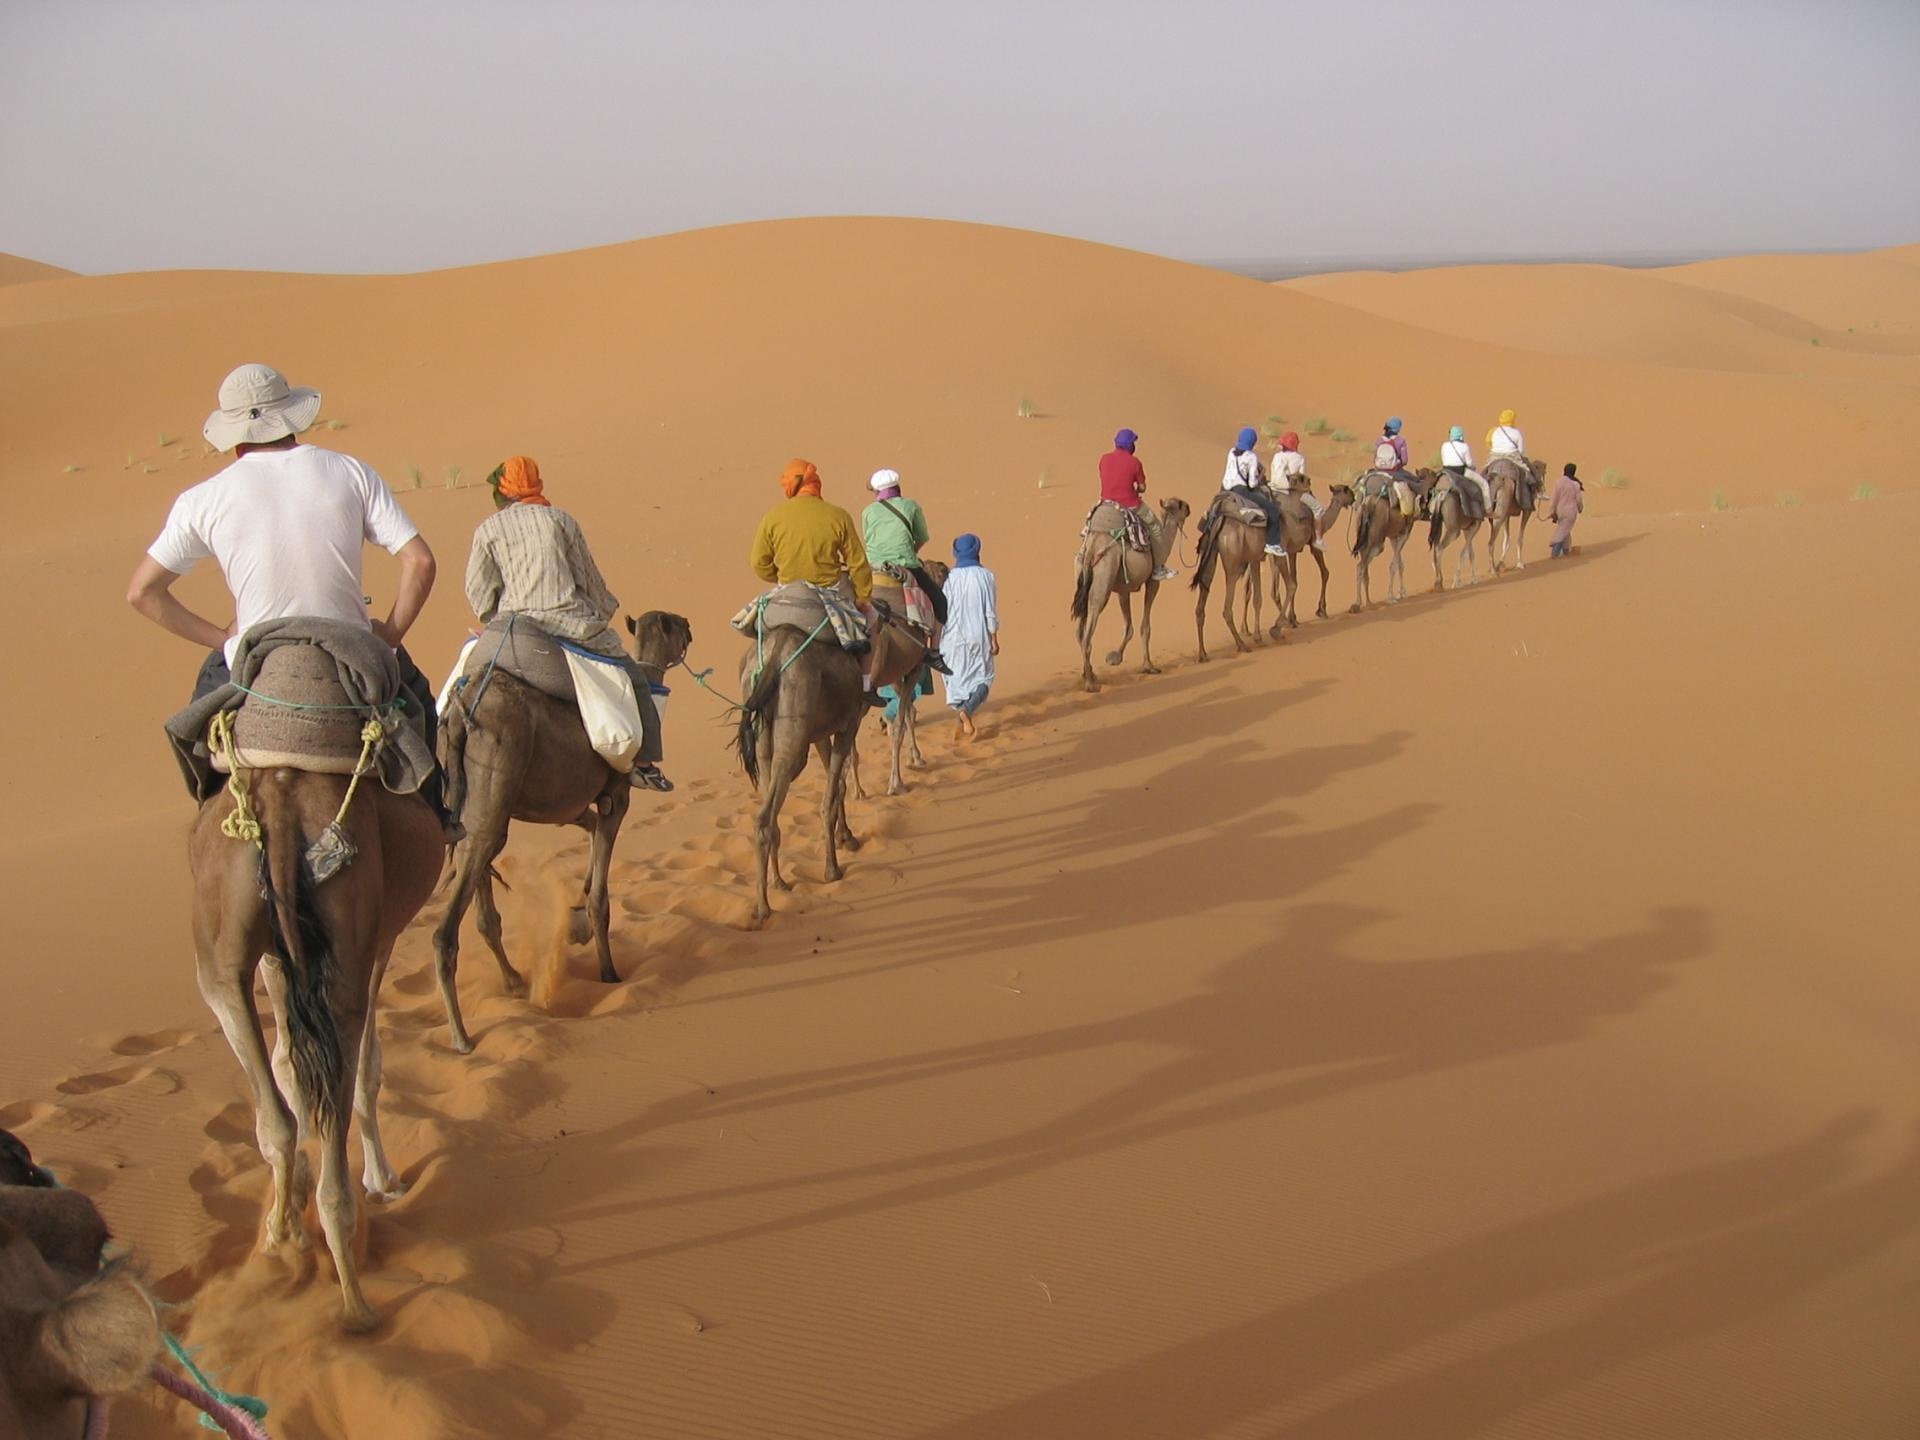 tourhub | Tilila Travel | Best of Morocco Tour from Casablanca | Morocco 15 Days